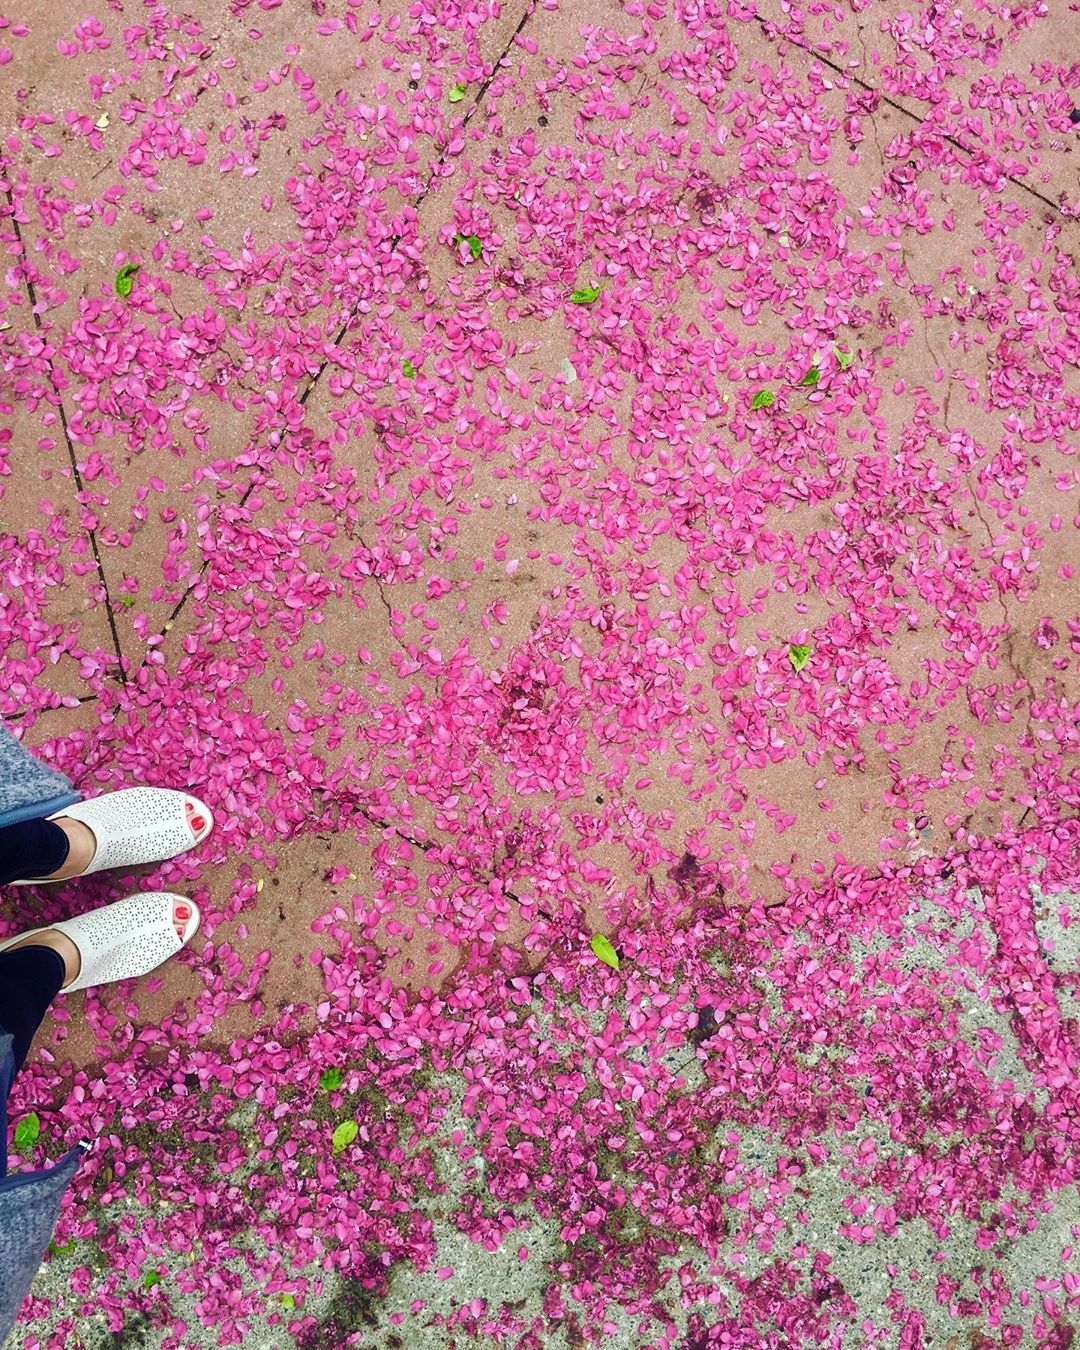 pink petal season is here ! 😍 (at Saint Paul, Minnesota)
https://www.instagram.com/p/BxncGzAh9cd/?igshid=1df70s3ie1quc